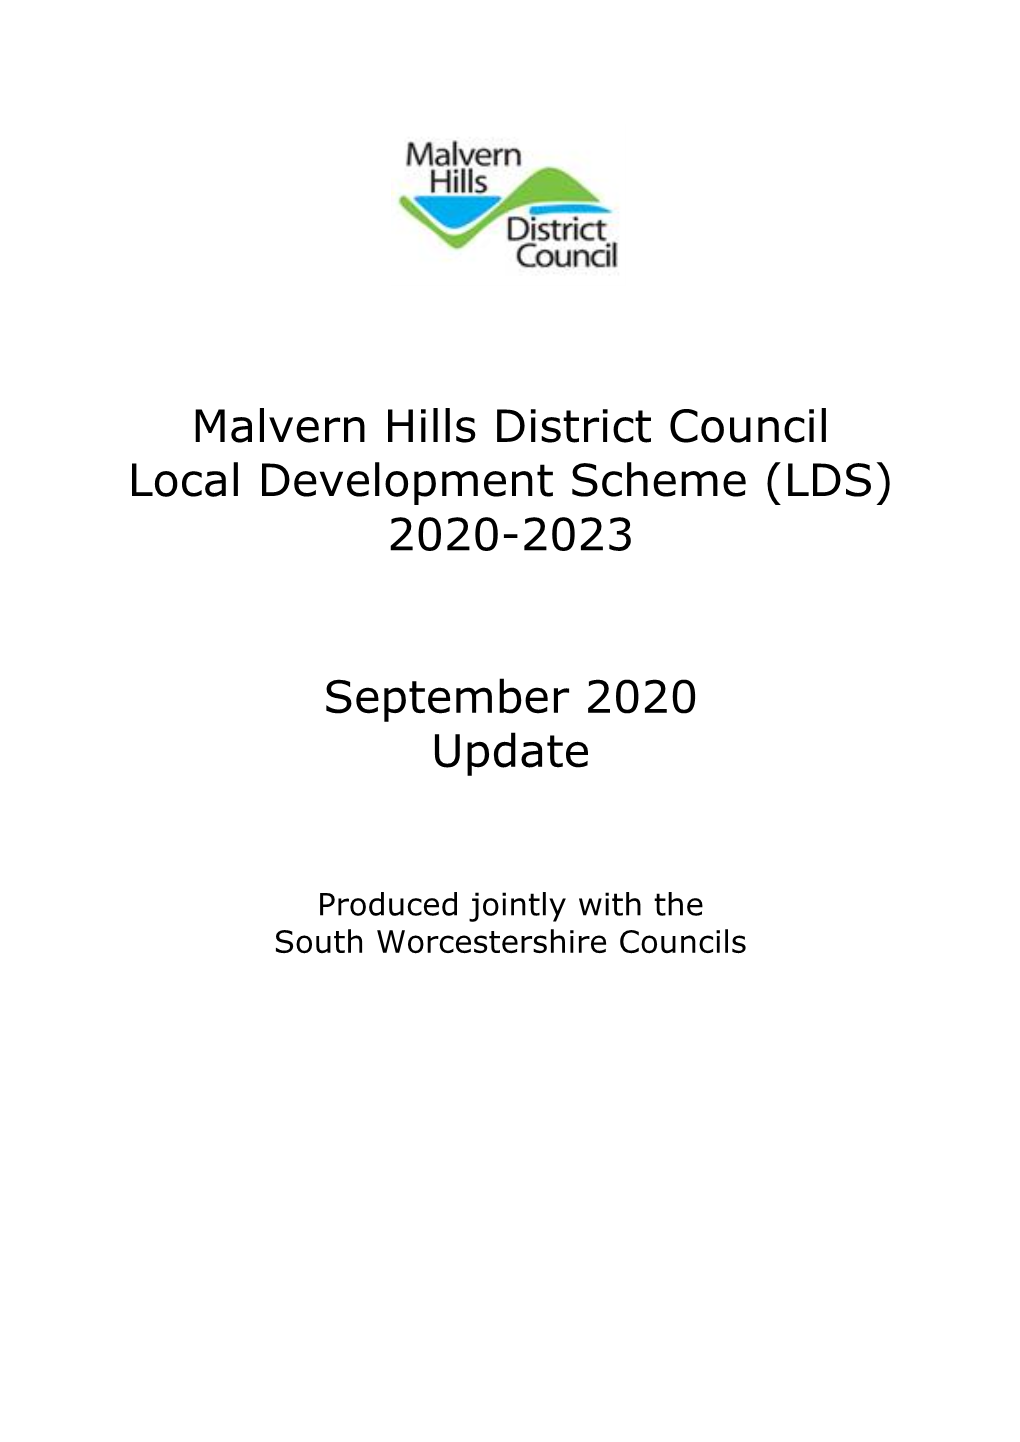 Malvern Hills District Council Local Development Scheme (LDS) 2020-2023